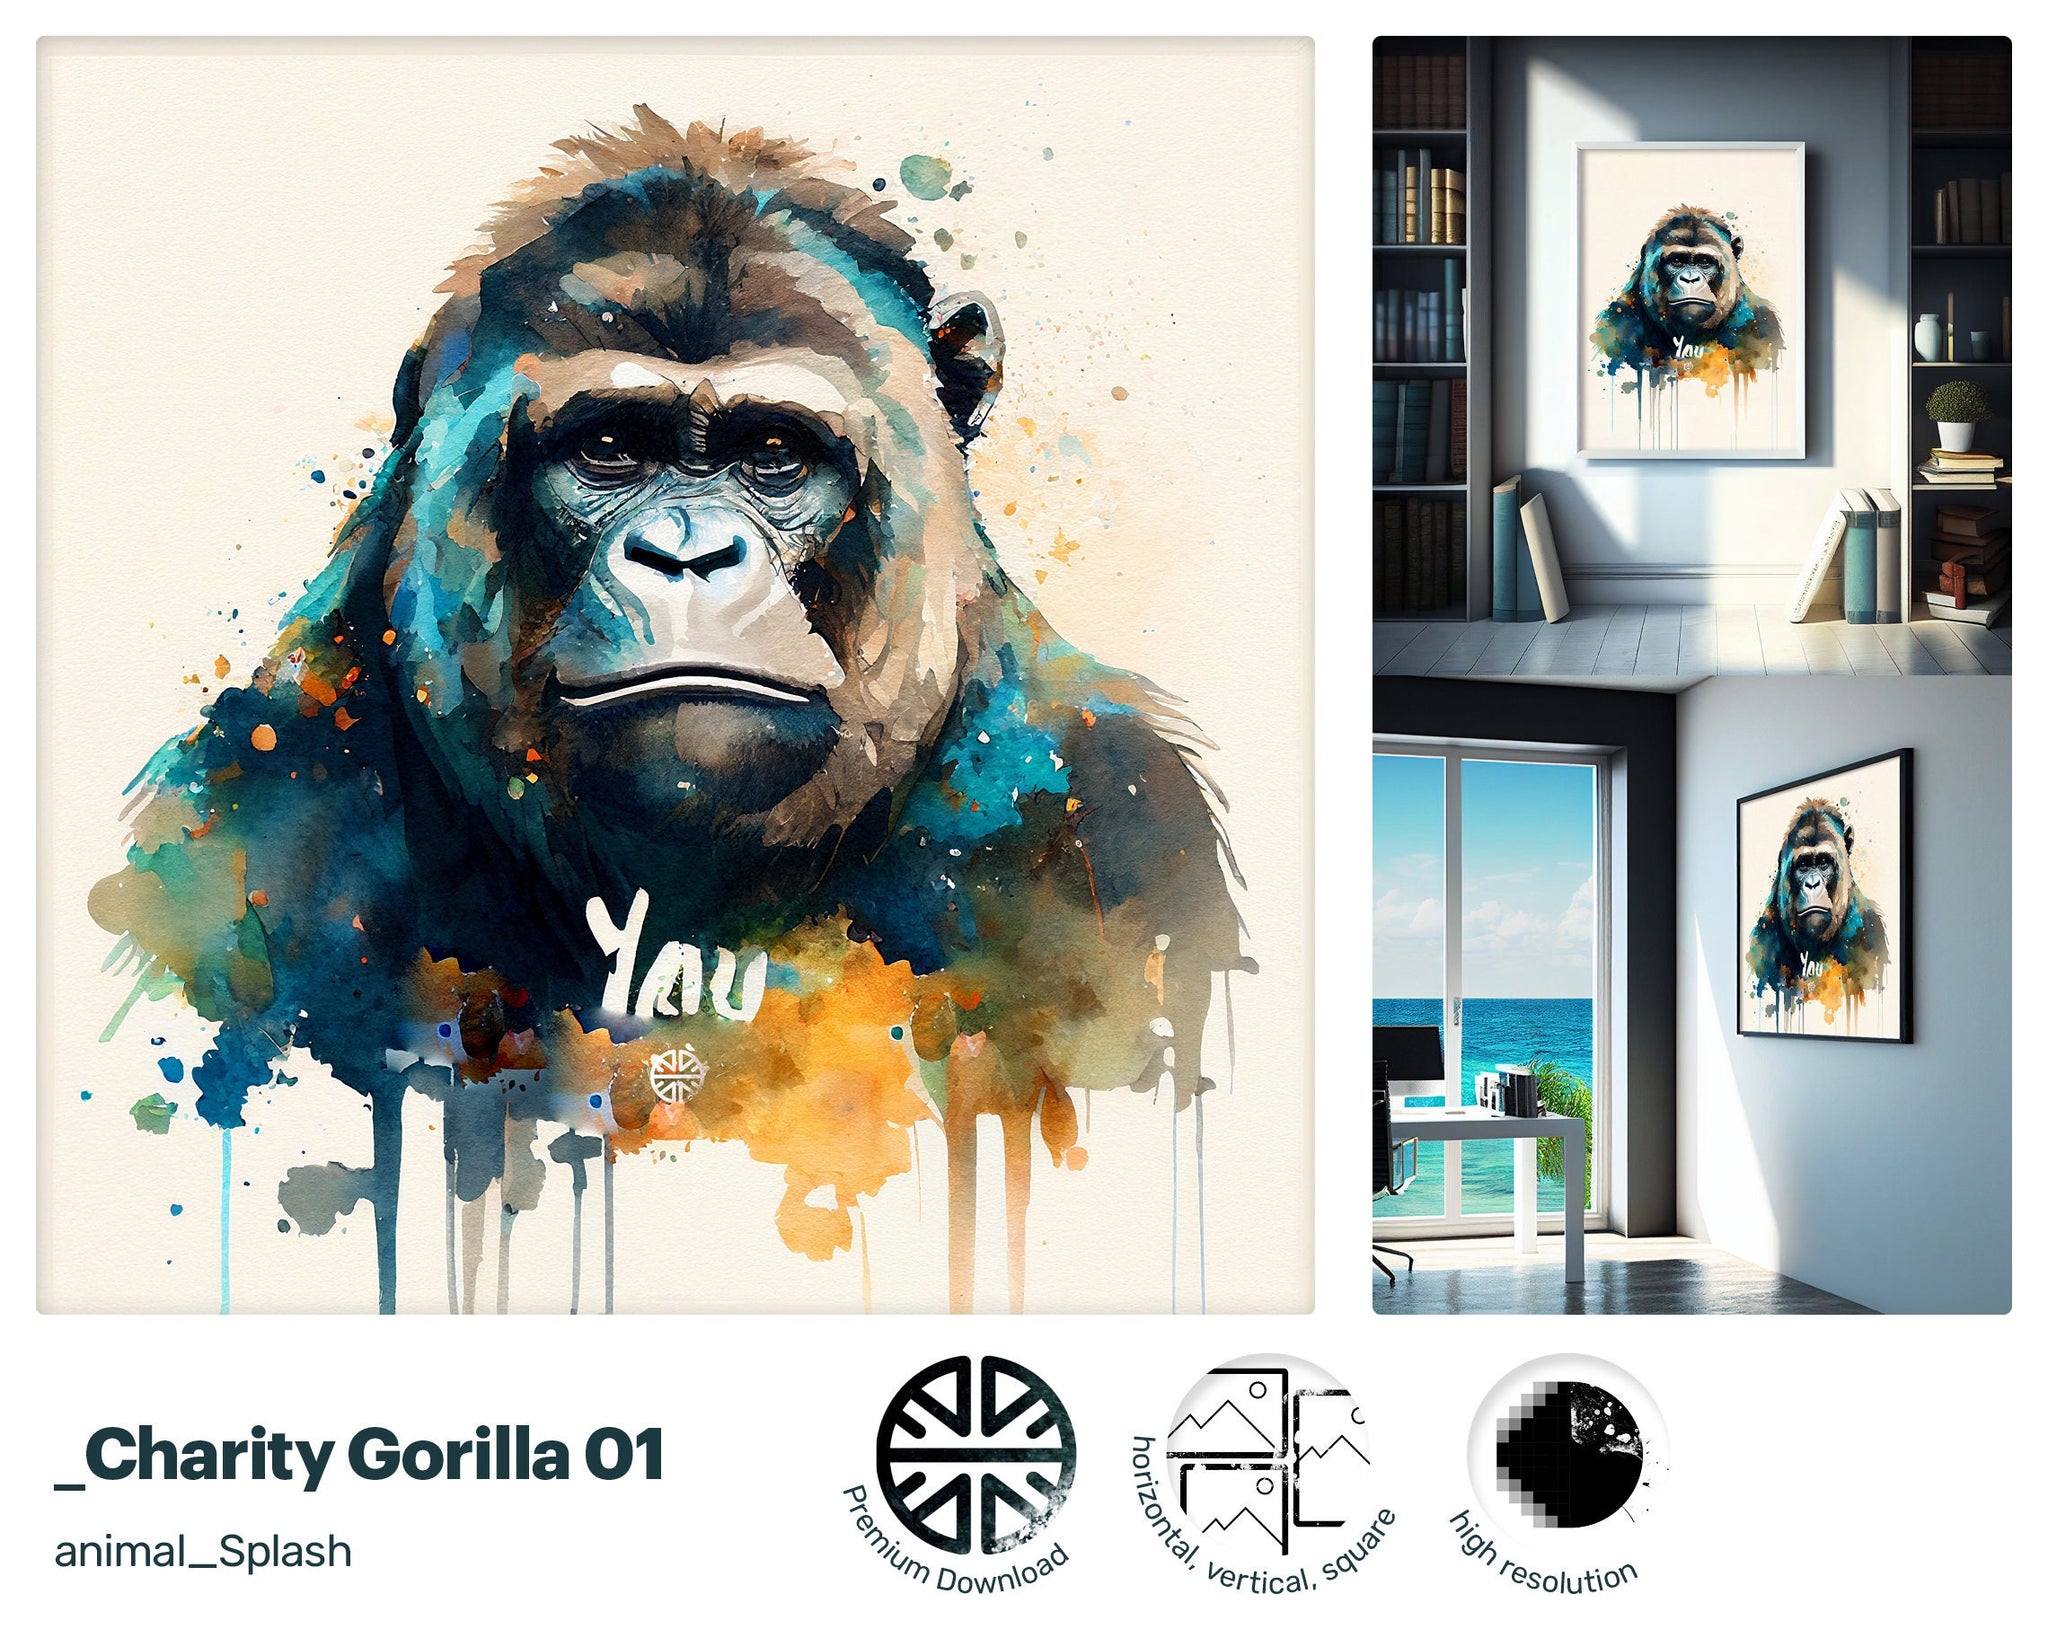 Majestic Funny Gorilla, Sparkling Dazzling artwork, Dreamy Trending Graceful Upbeat Vivacious Graffiti Art